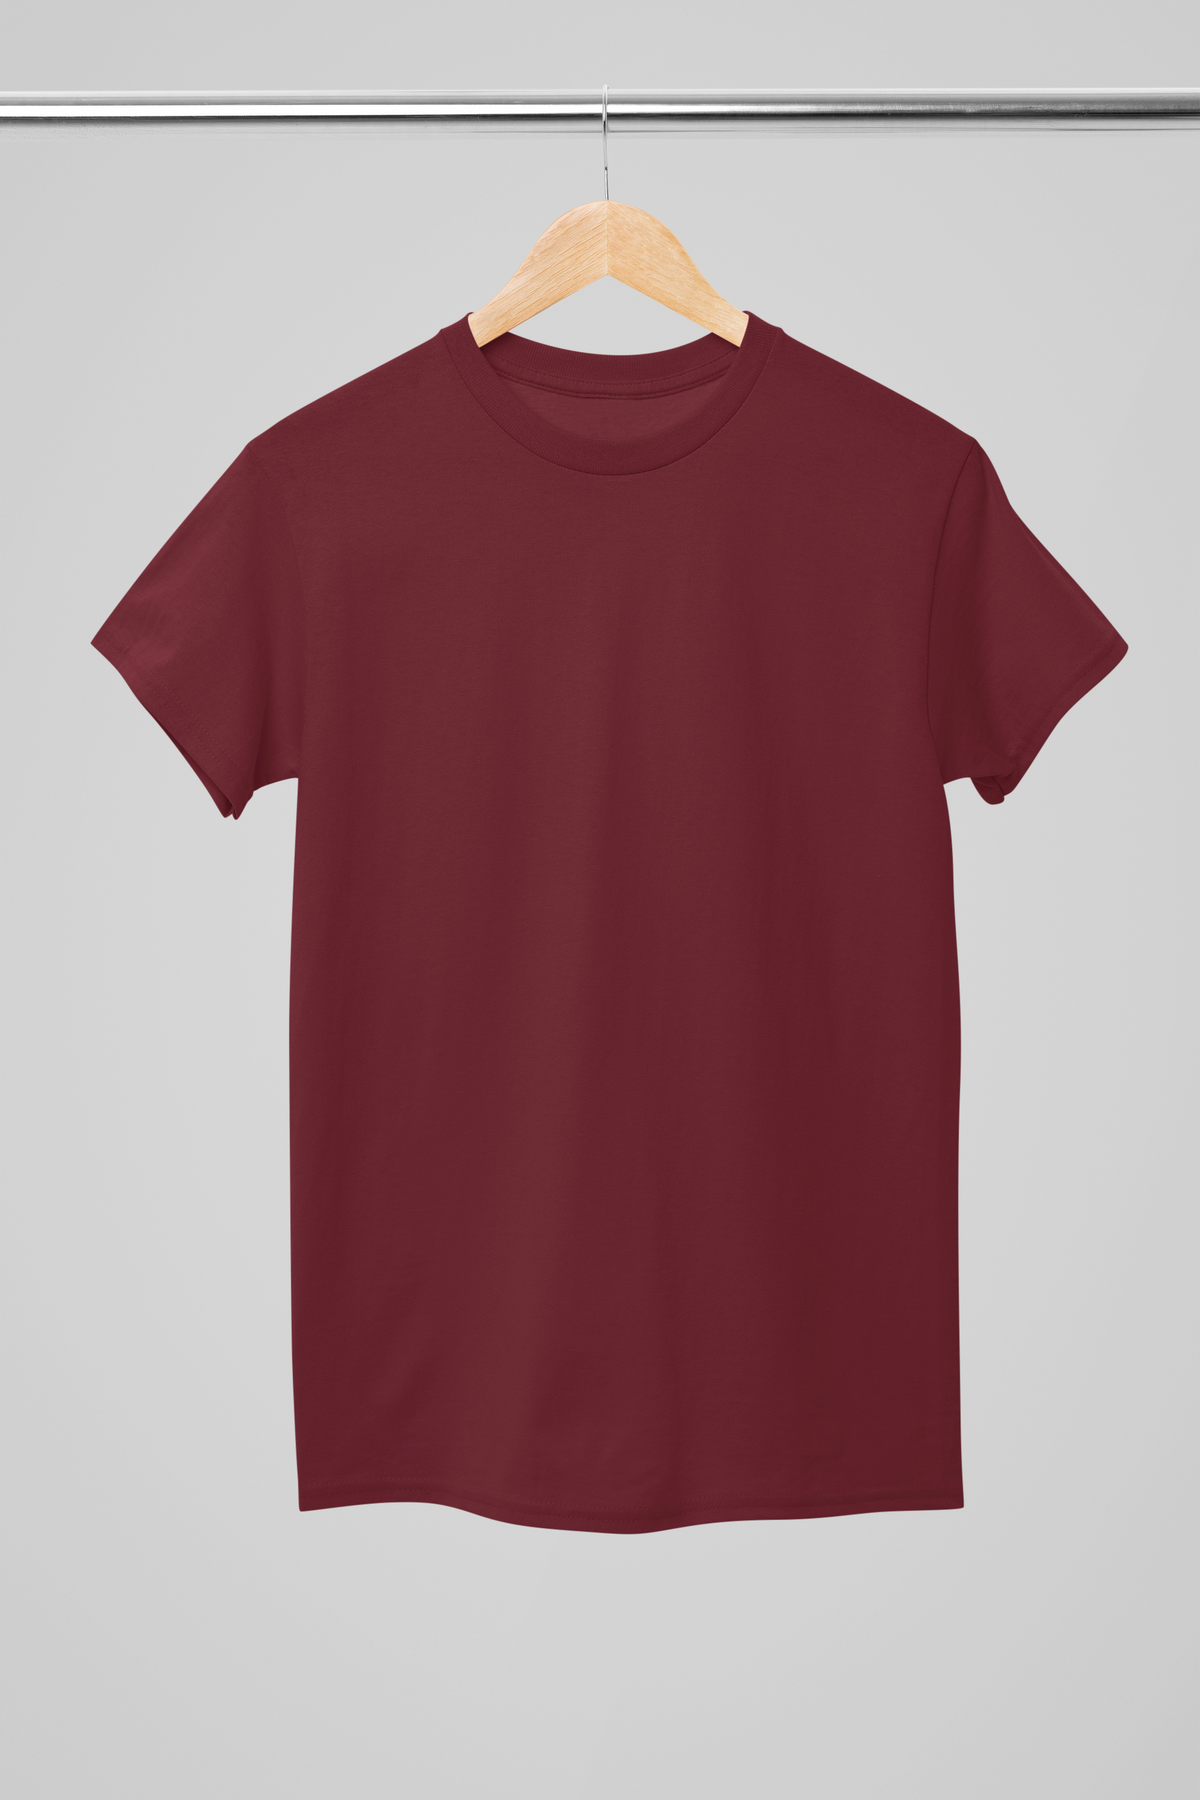 Plain Maroon Unisex T-shirt